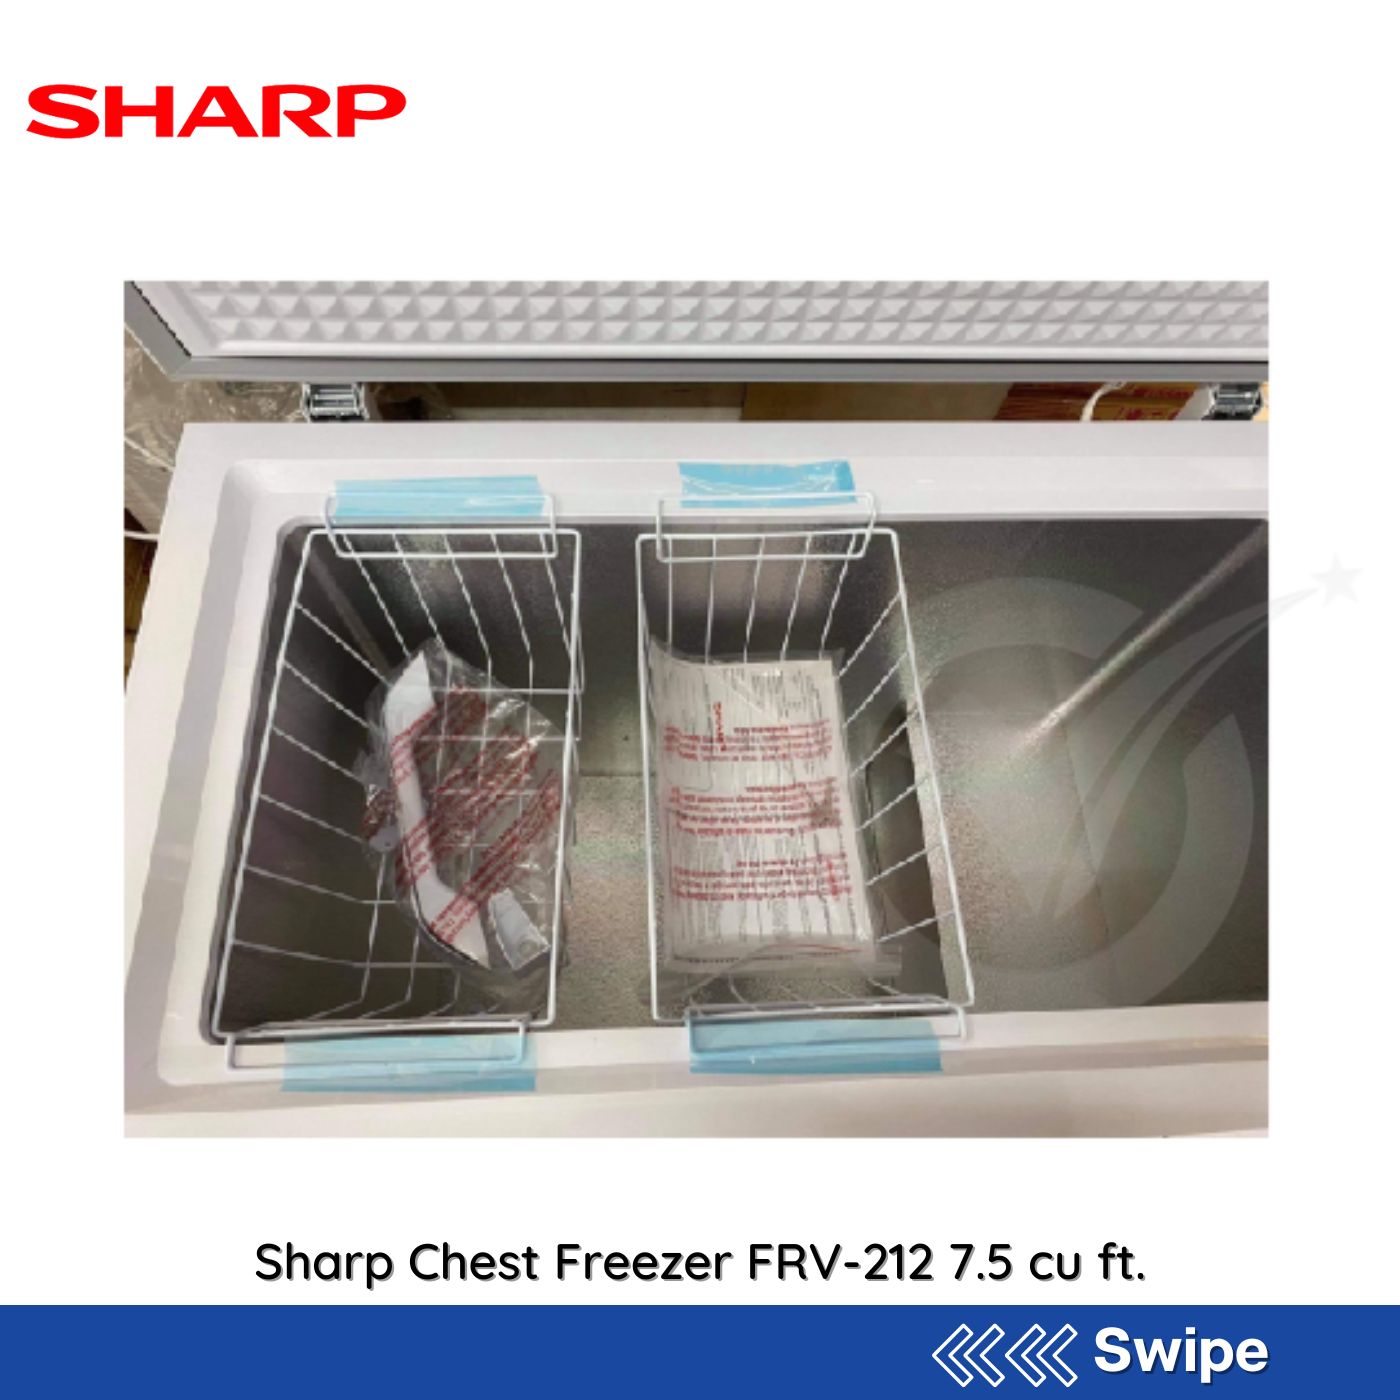 Sharp Chest Freezer FRV-212 7.5 cu ft.